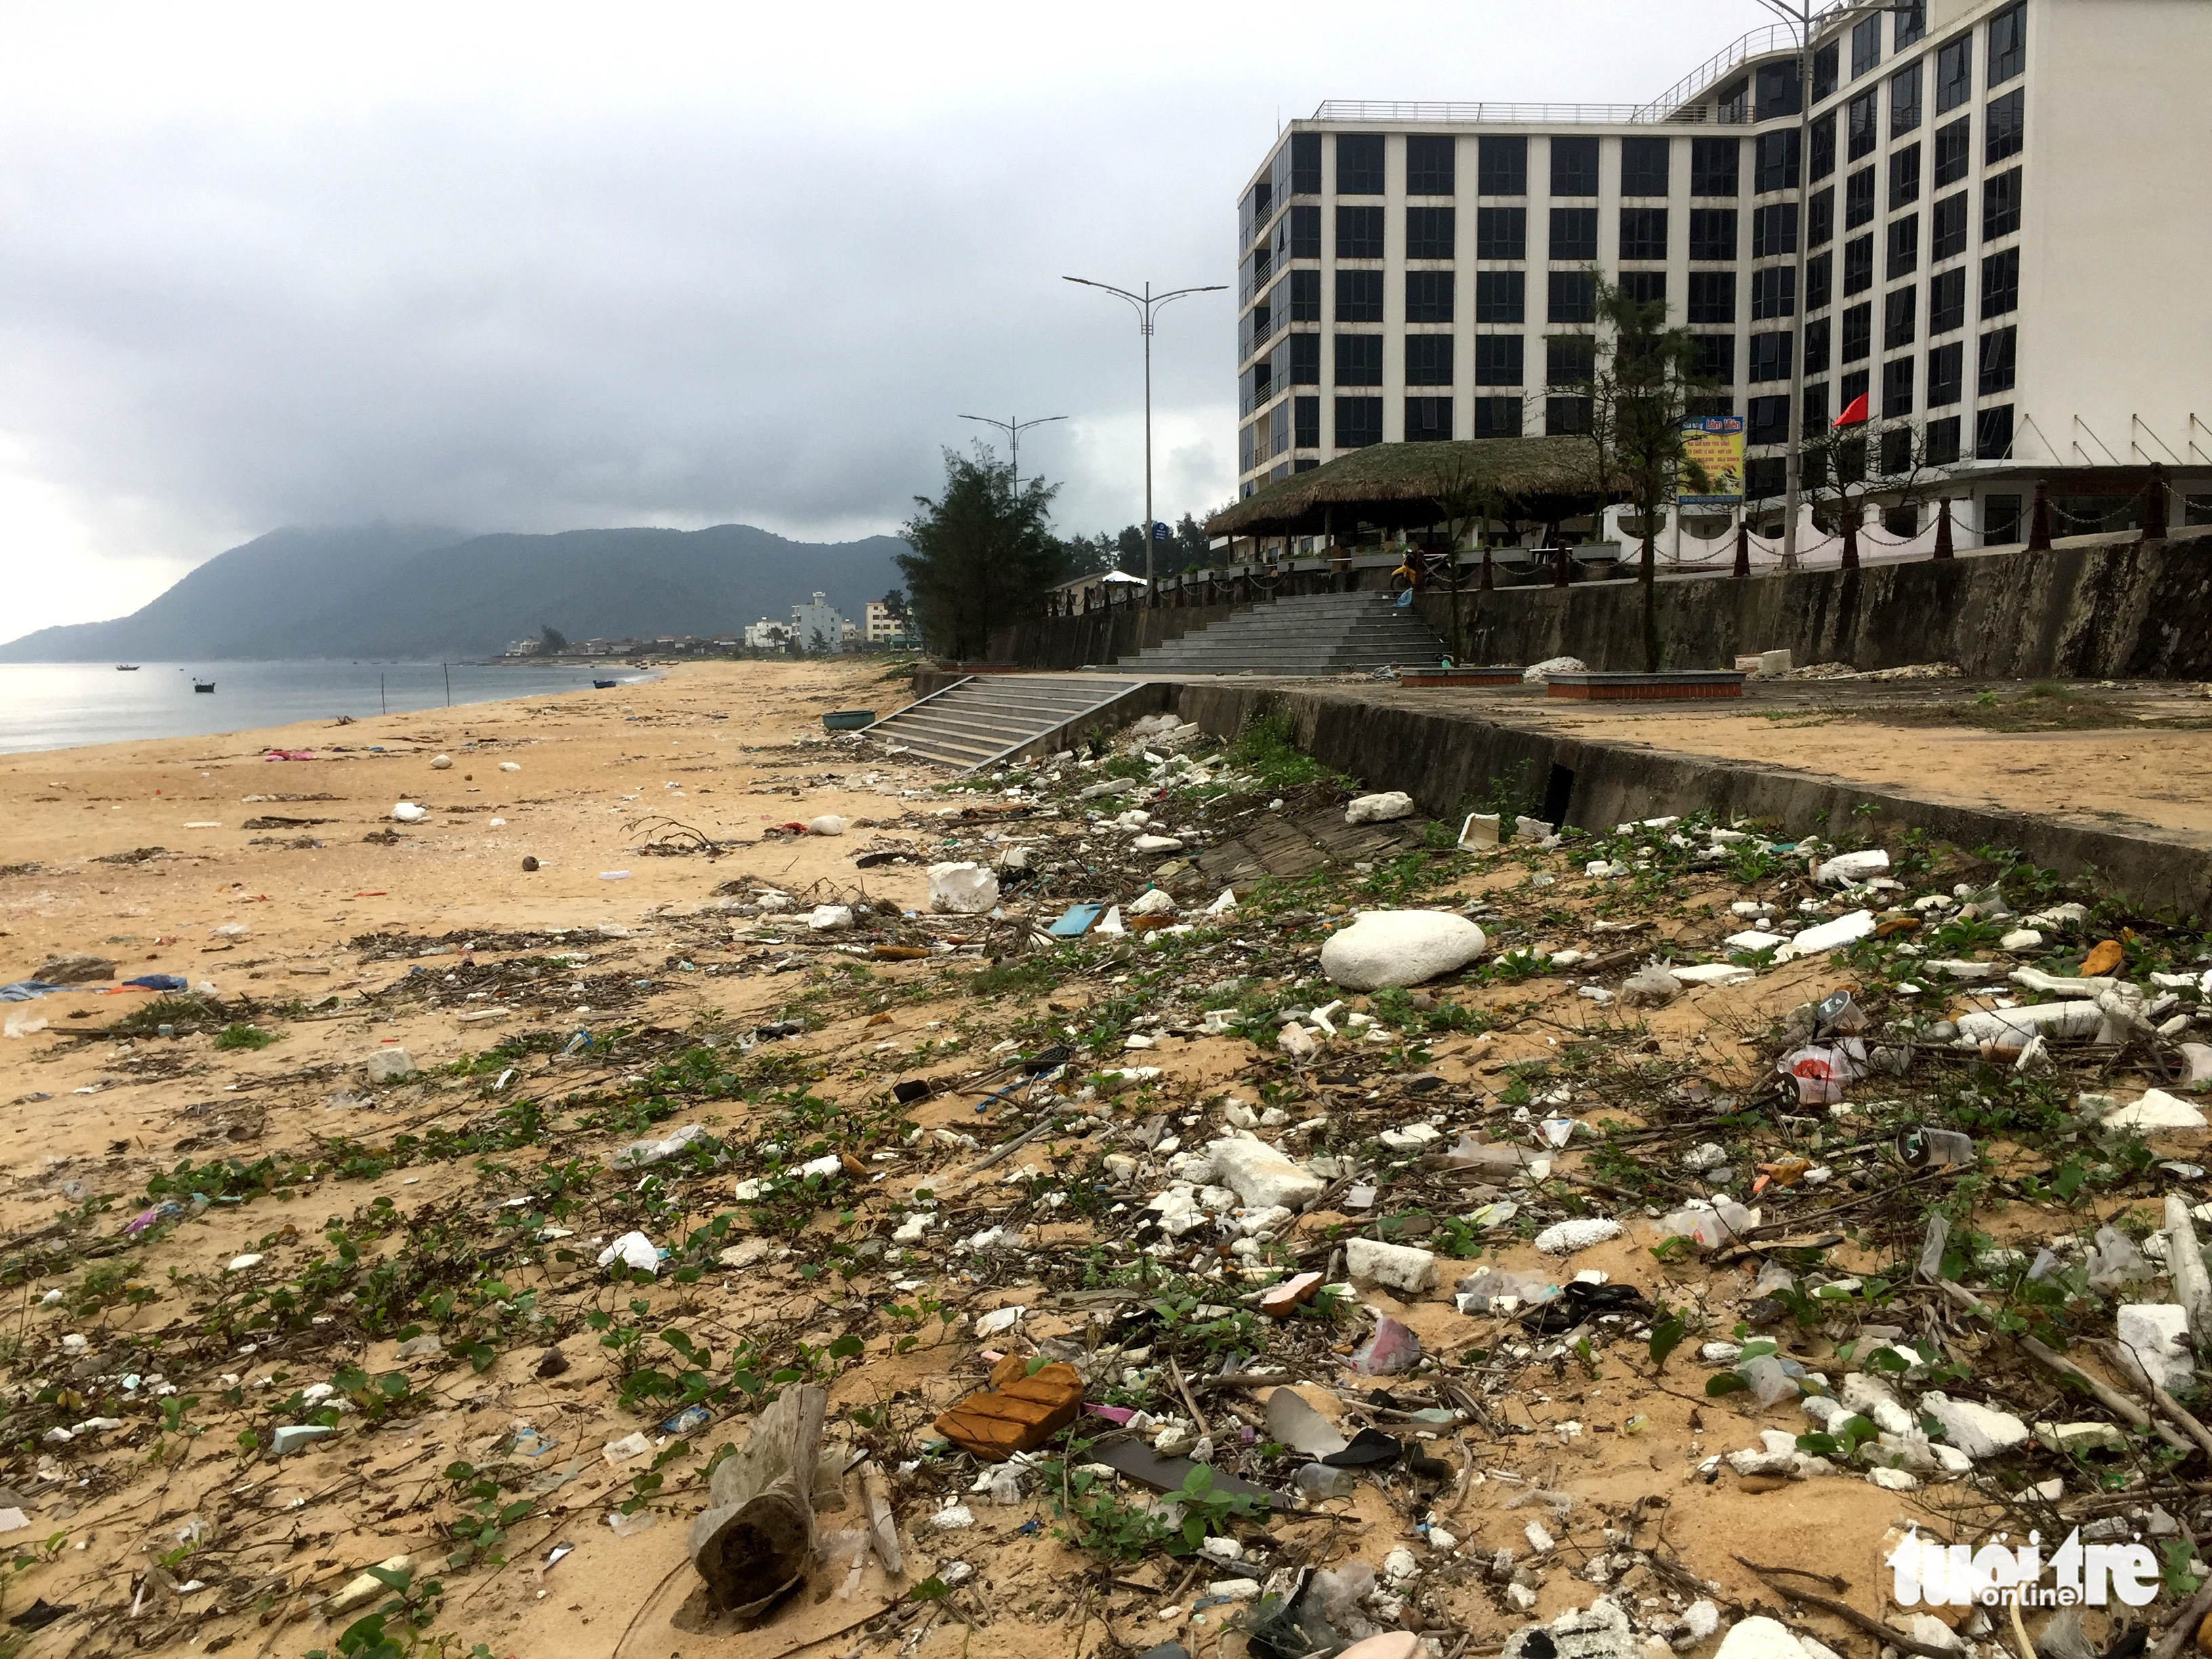 Trash fills beaches in Vietnamese province ahead of summer tourist season